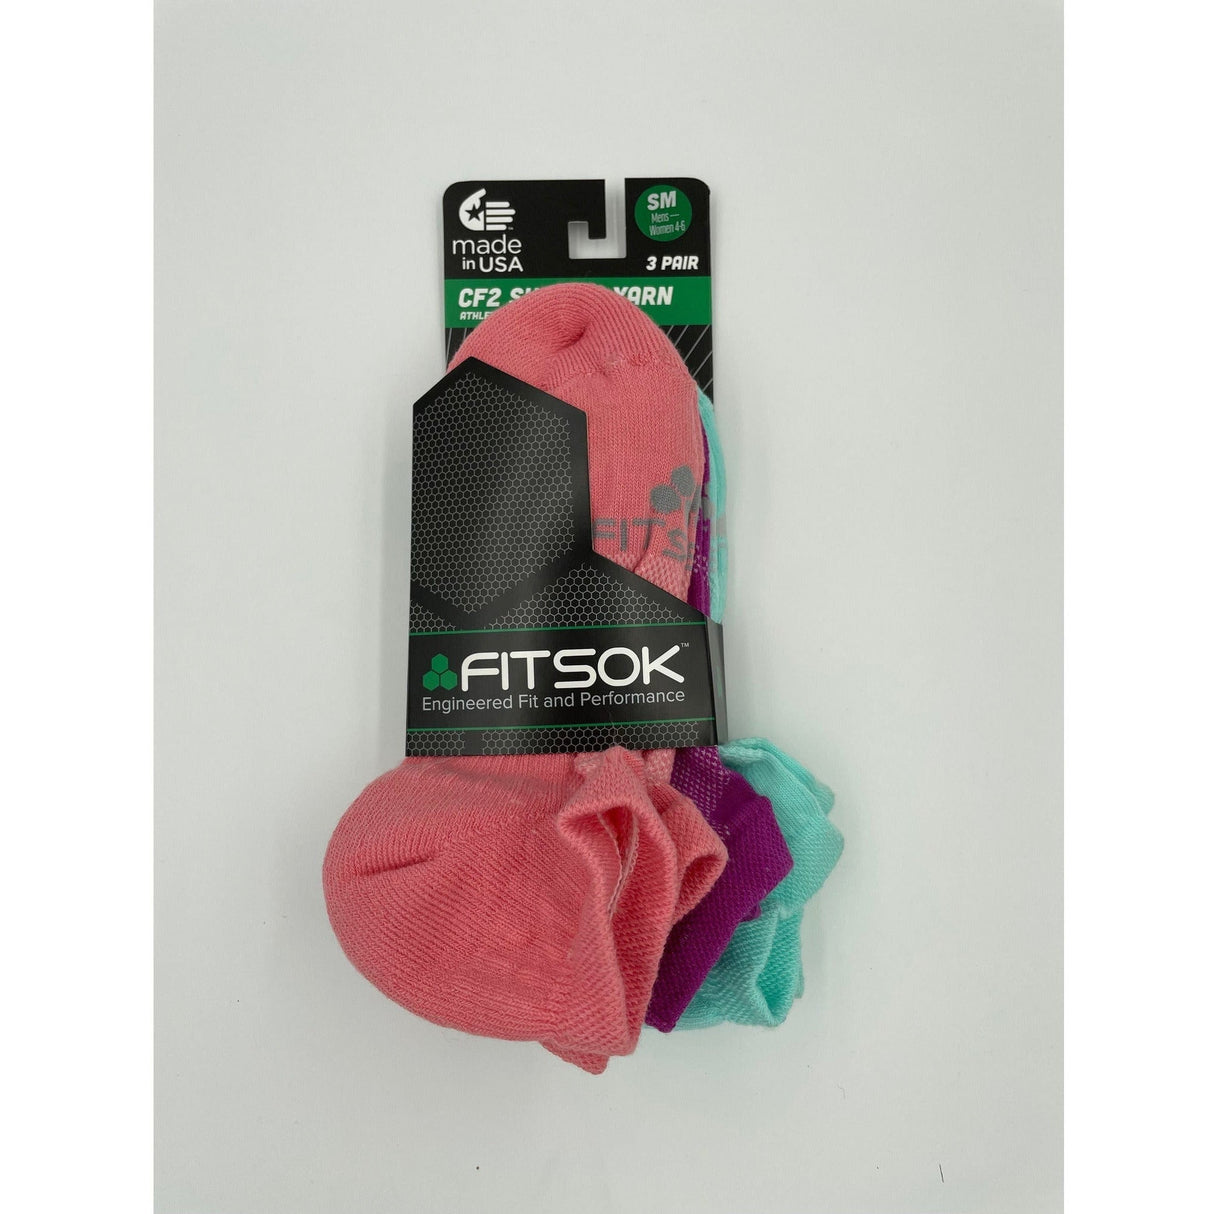 Fitsok CF2 Low Cut Cushion Socks  -  Small / Body Pop